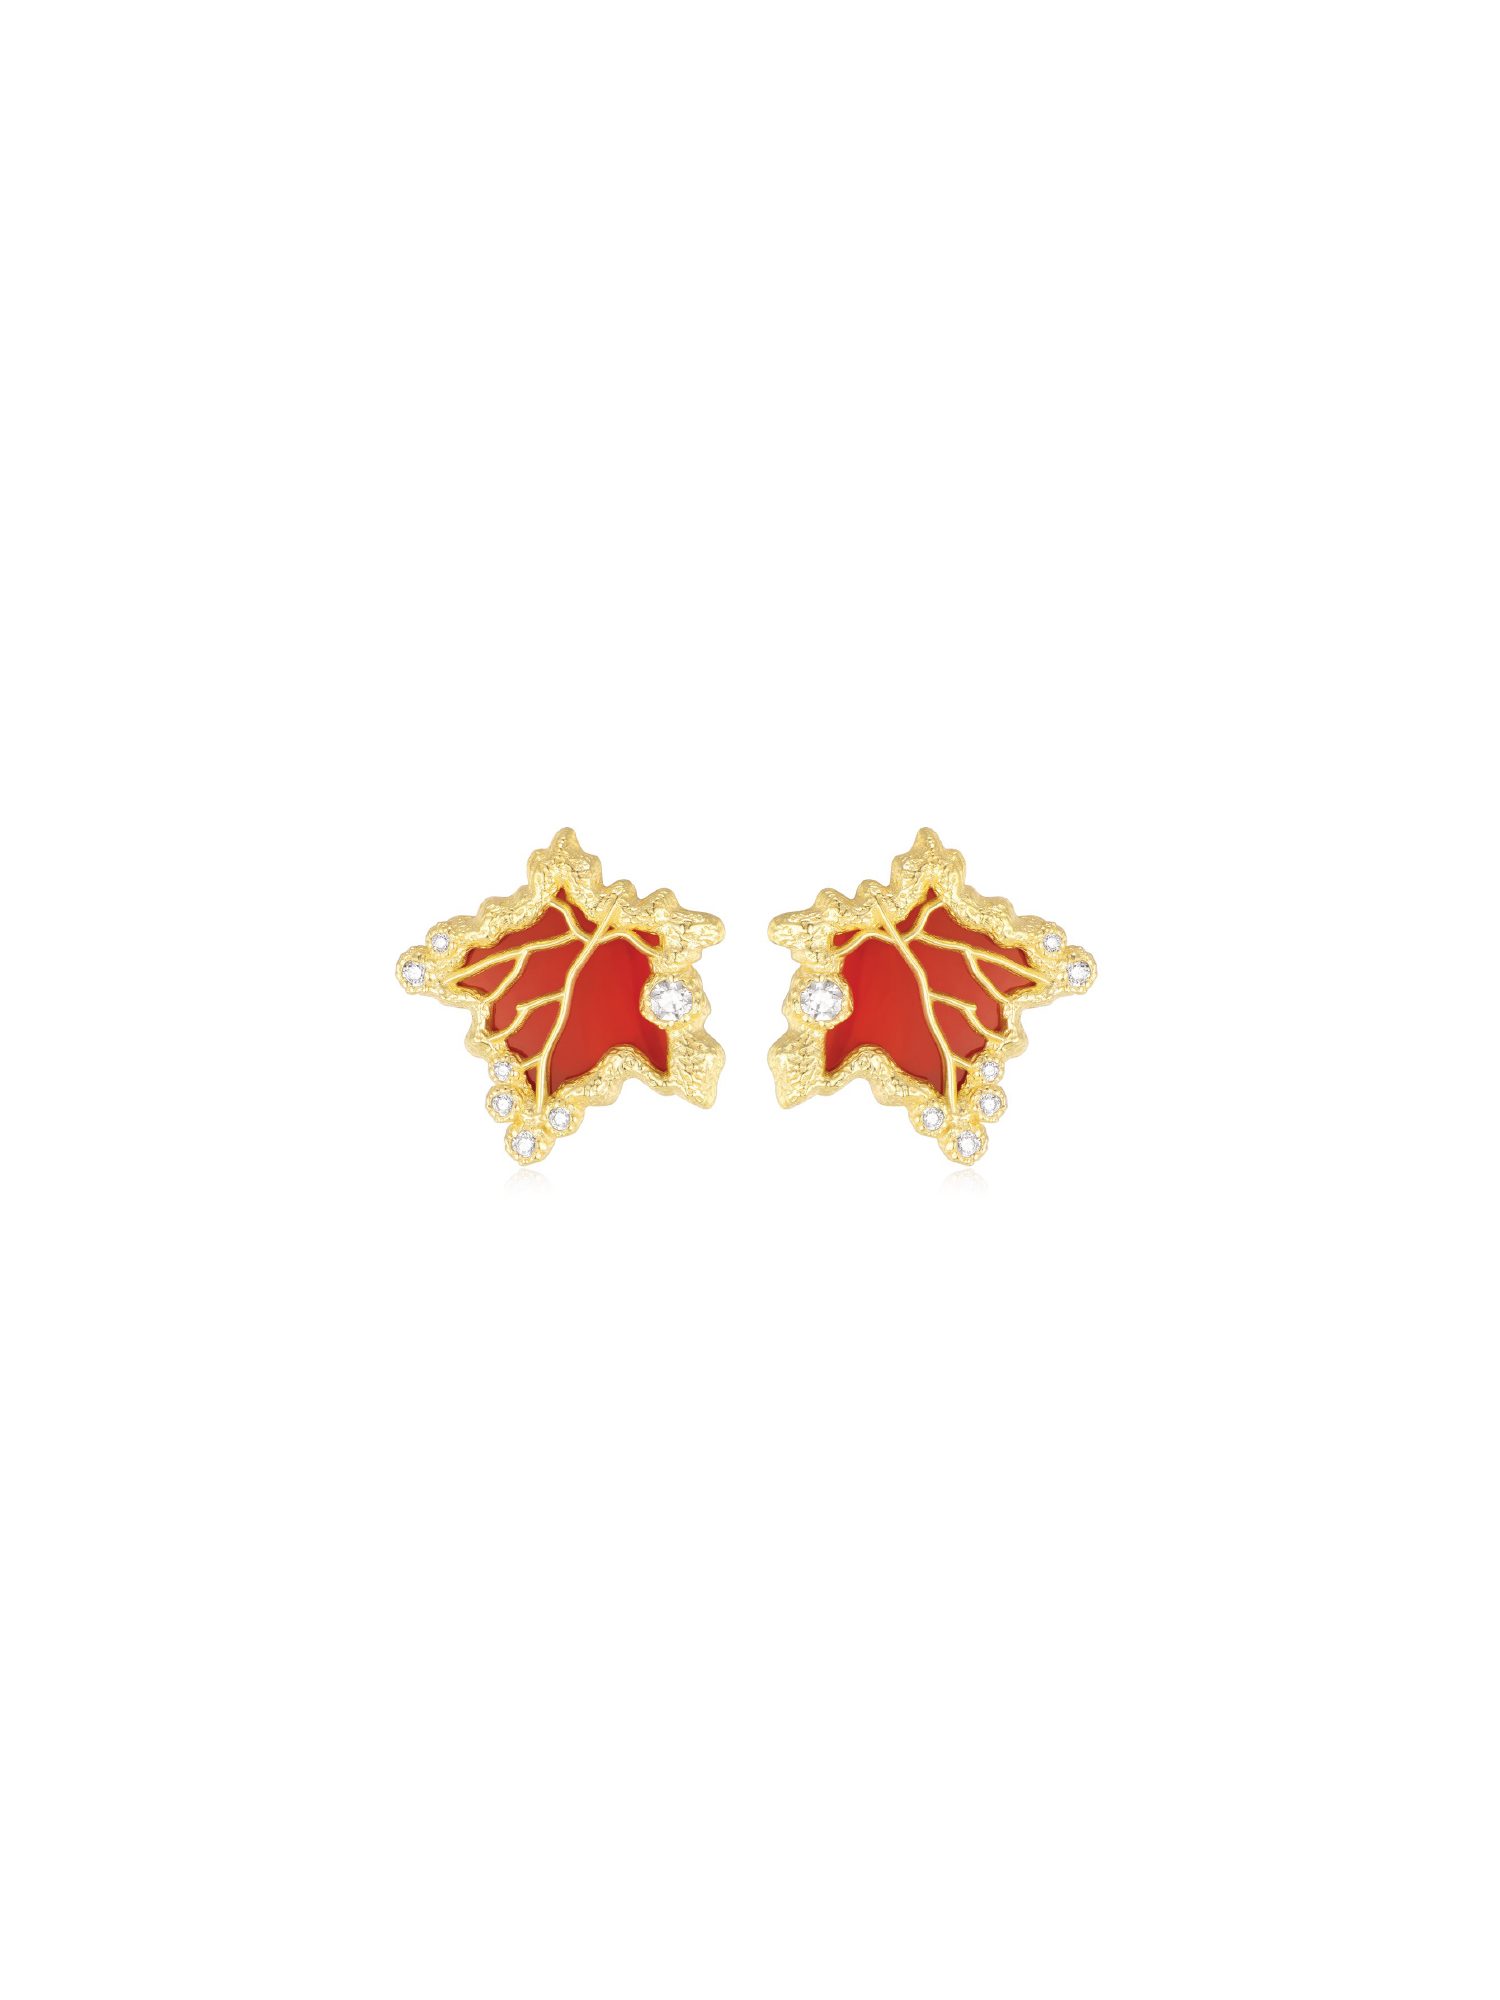 Autumn Leaf Earrings (Pair)